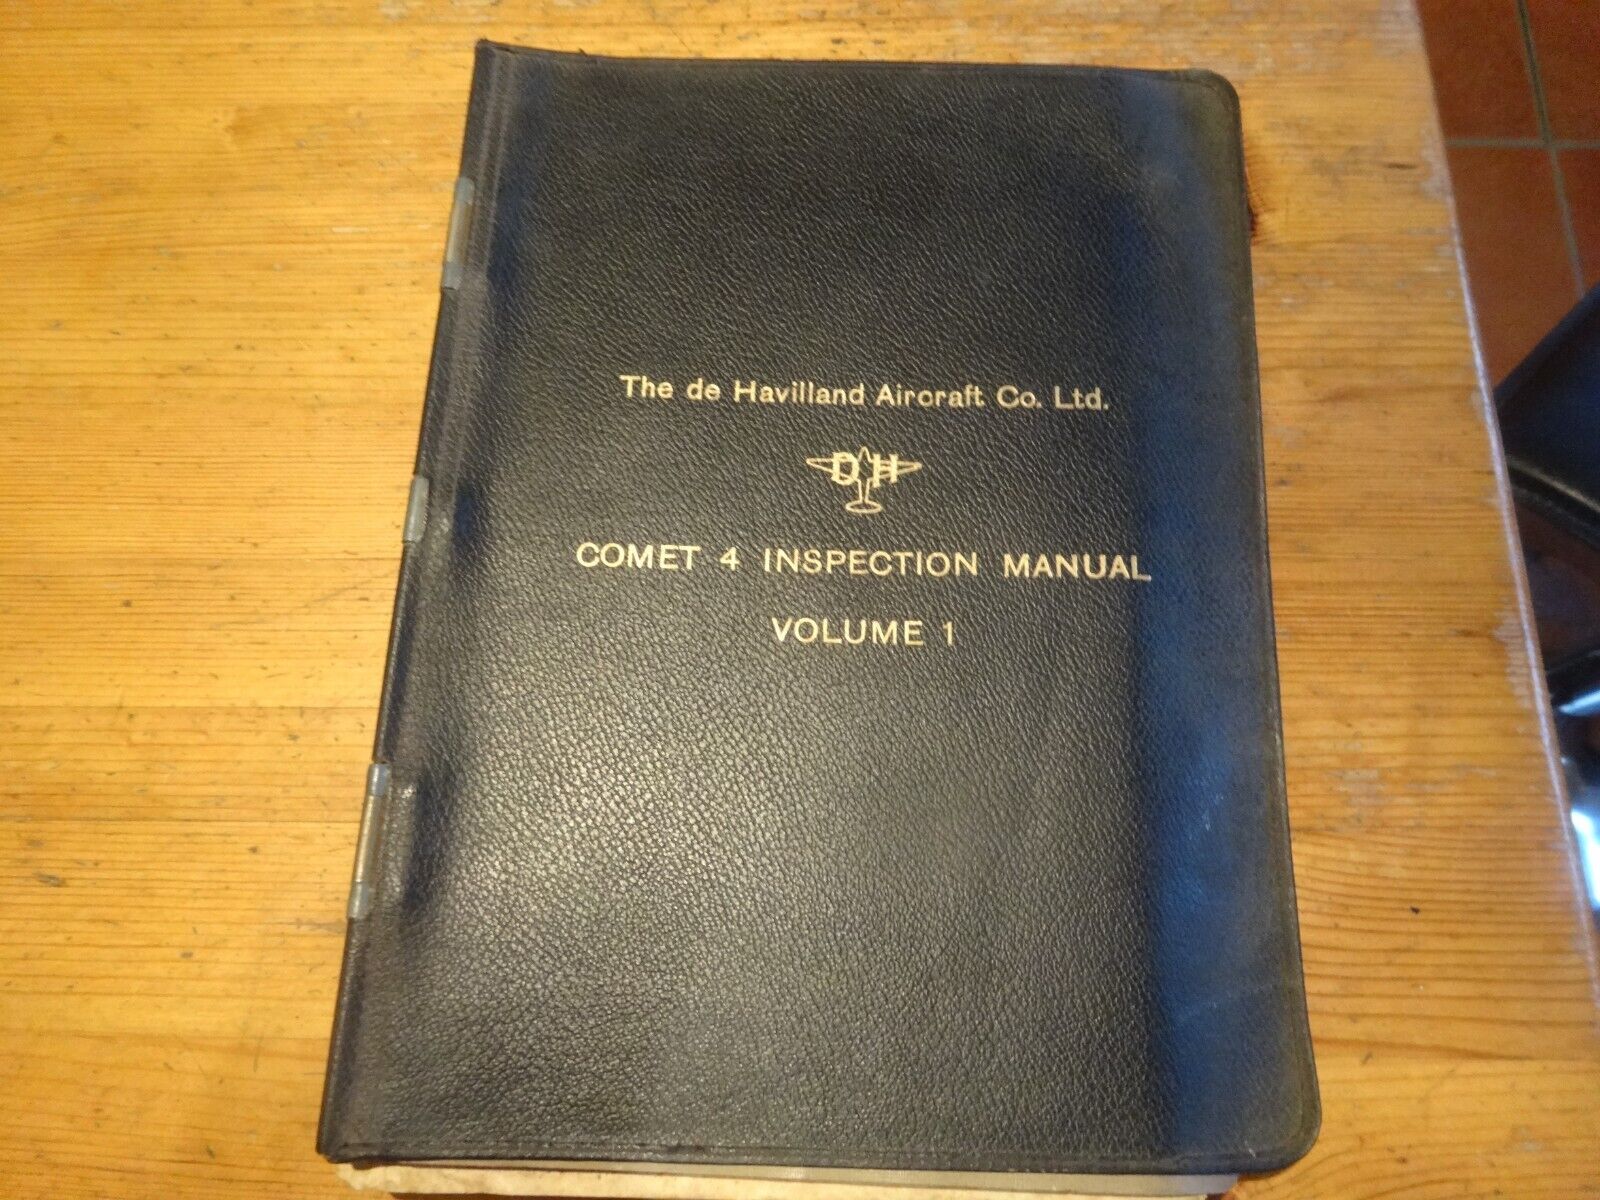 De Havilland Aircraft Co. Comet 4 Inspection Manual Volume 1 - 1957-59